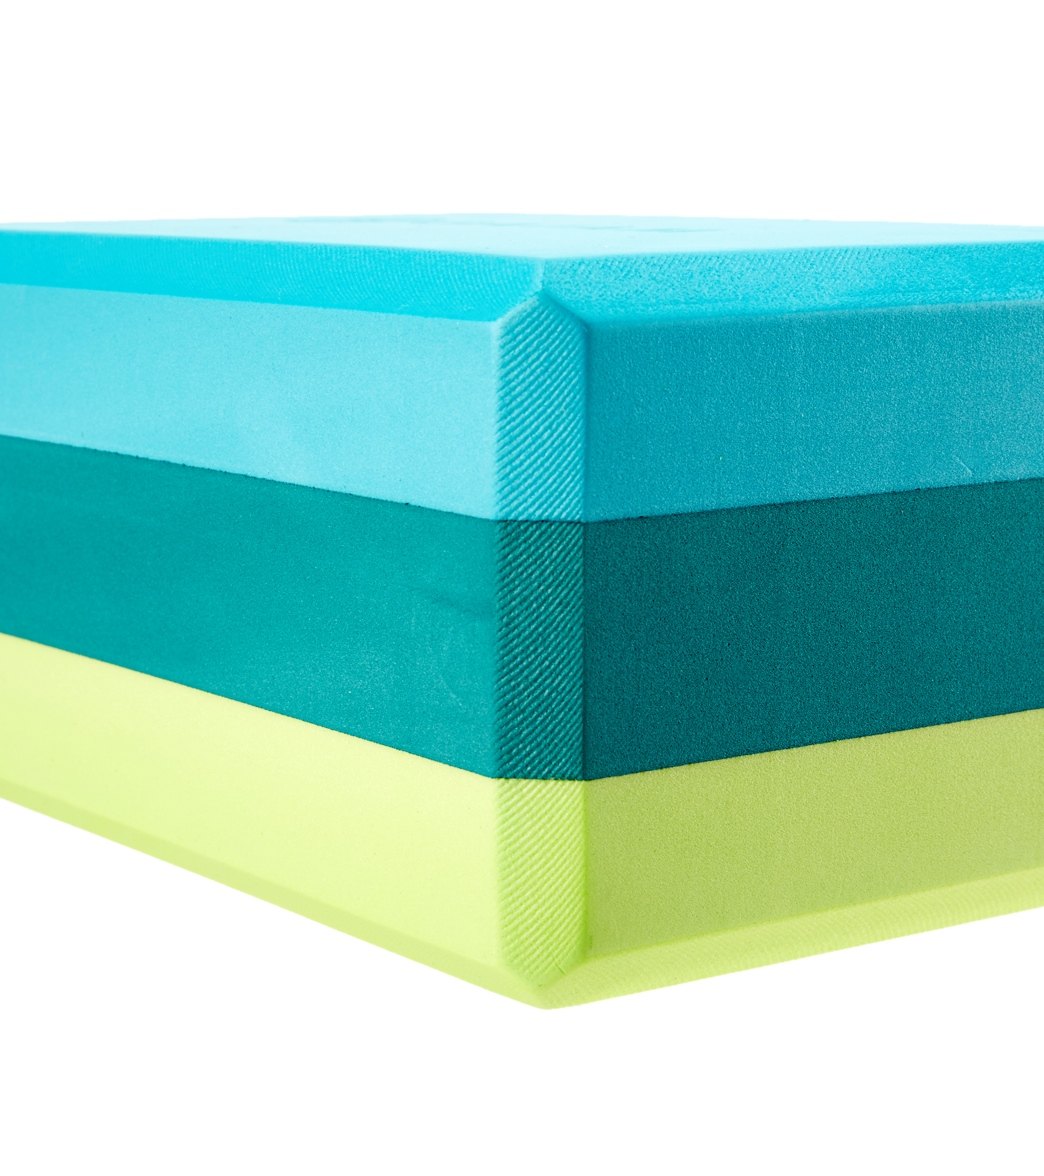 Gaiam Tri-Color Foam Yoga Block at